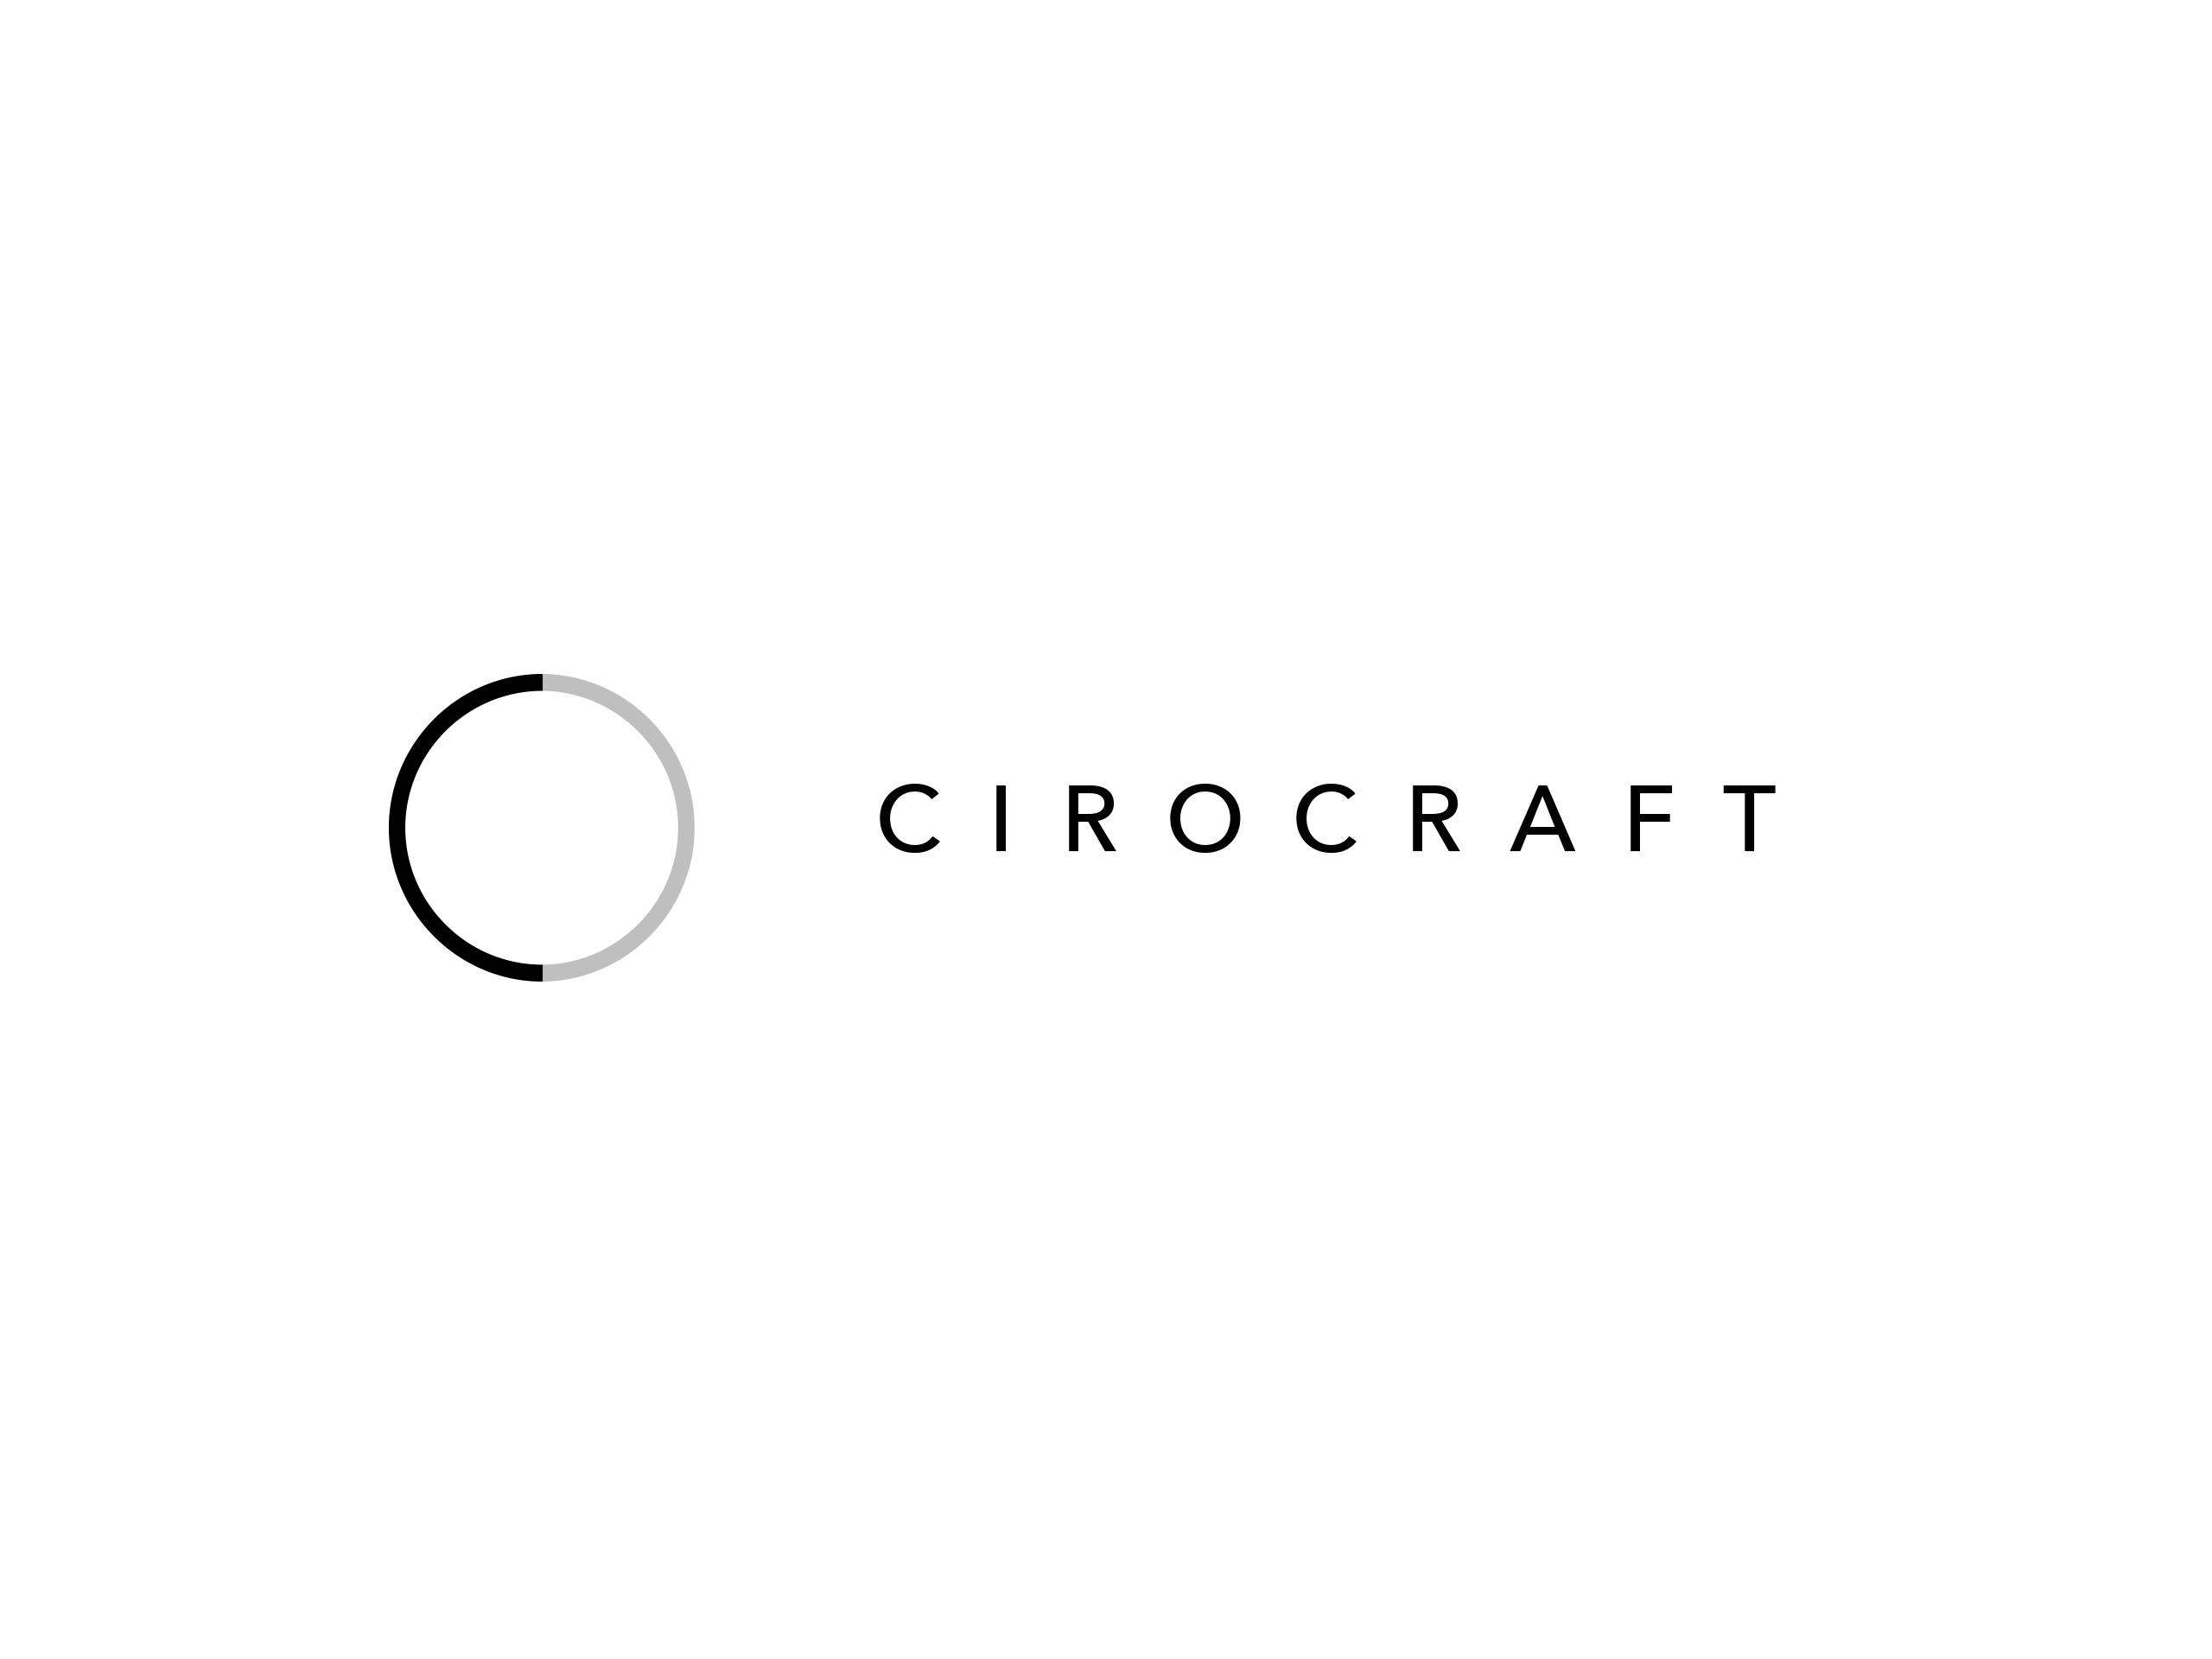 CIROCRAFT Inc. Corporate Logotype